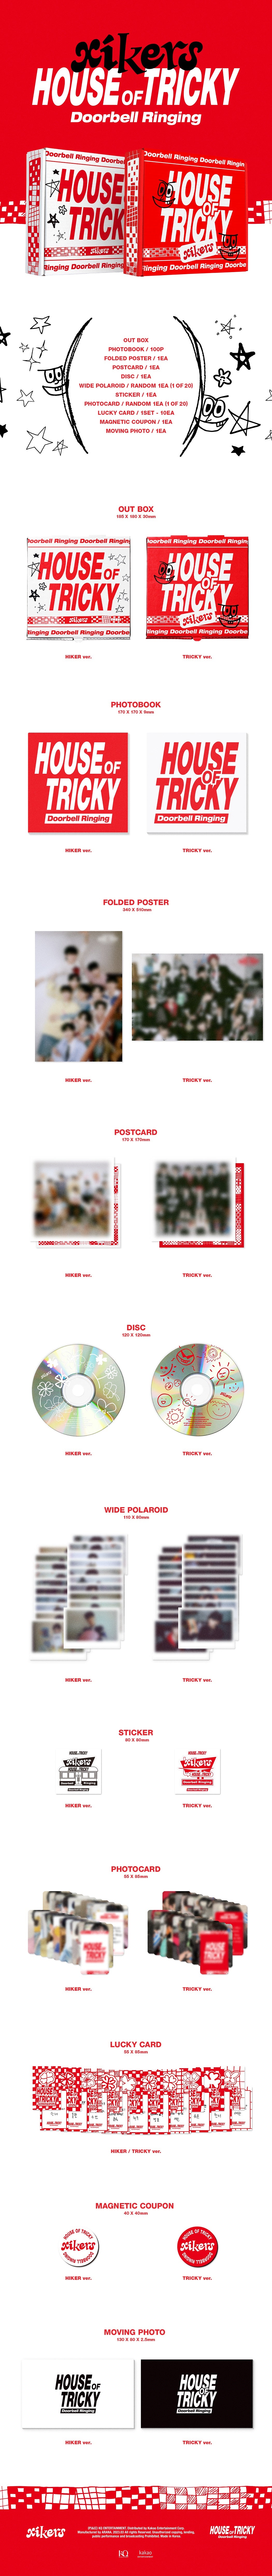 K-Pop CD Xikers - 1st Mini Album 'House of Tricky: Doorbell Ringing'